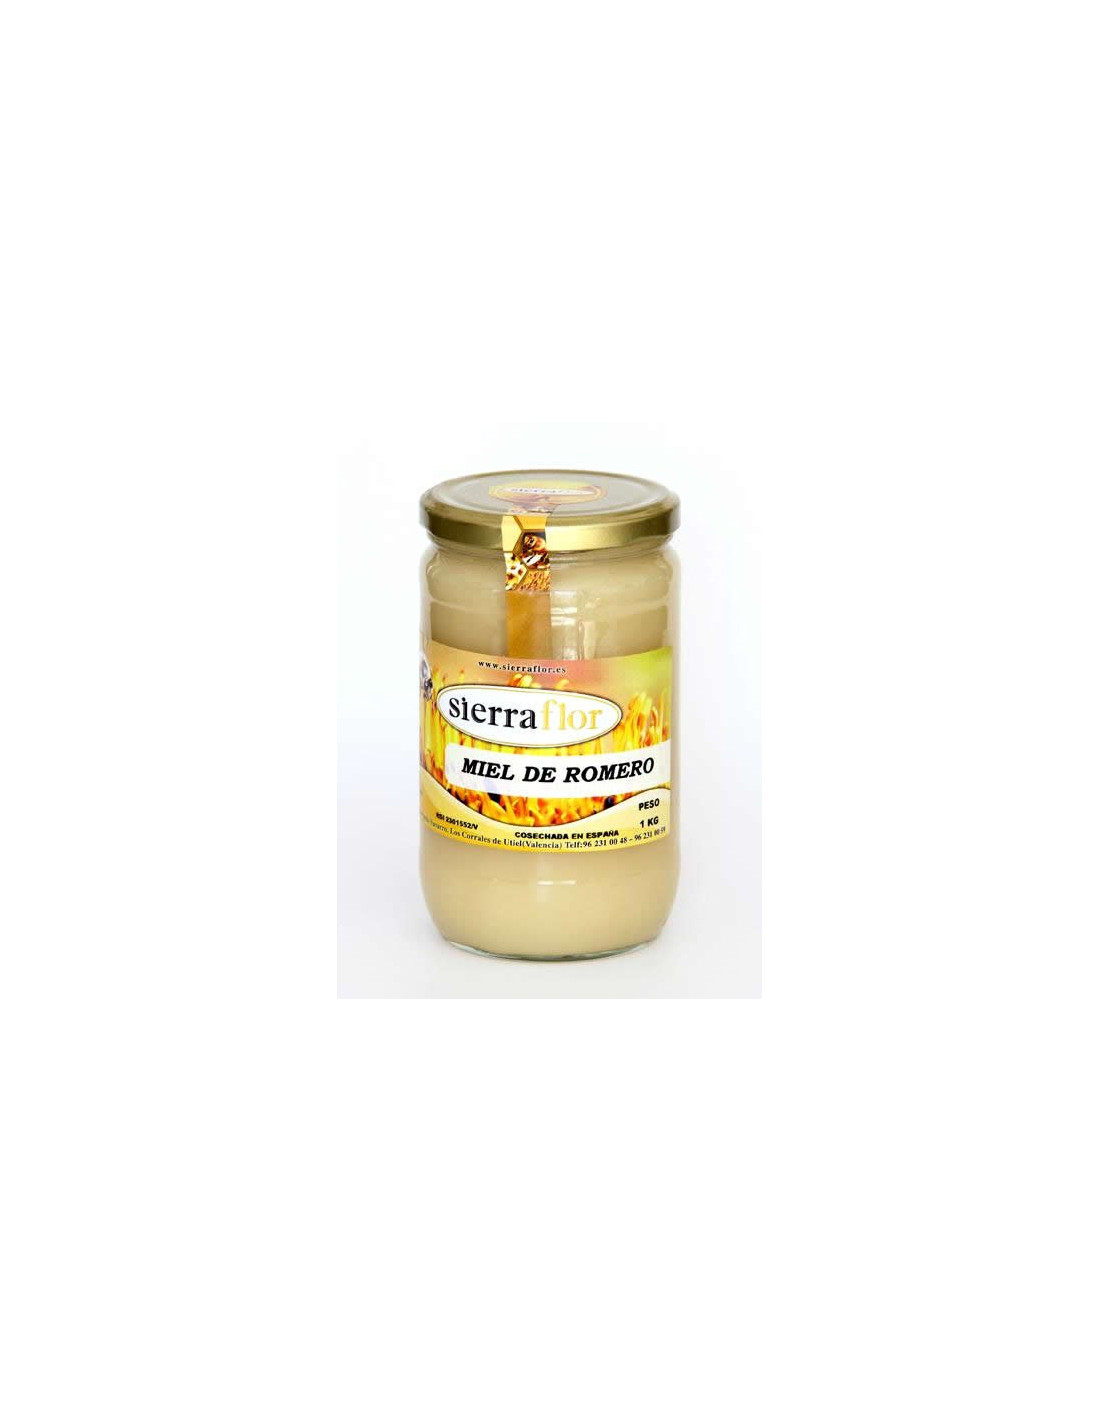 Panal de miel de romero